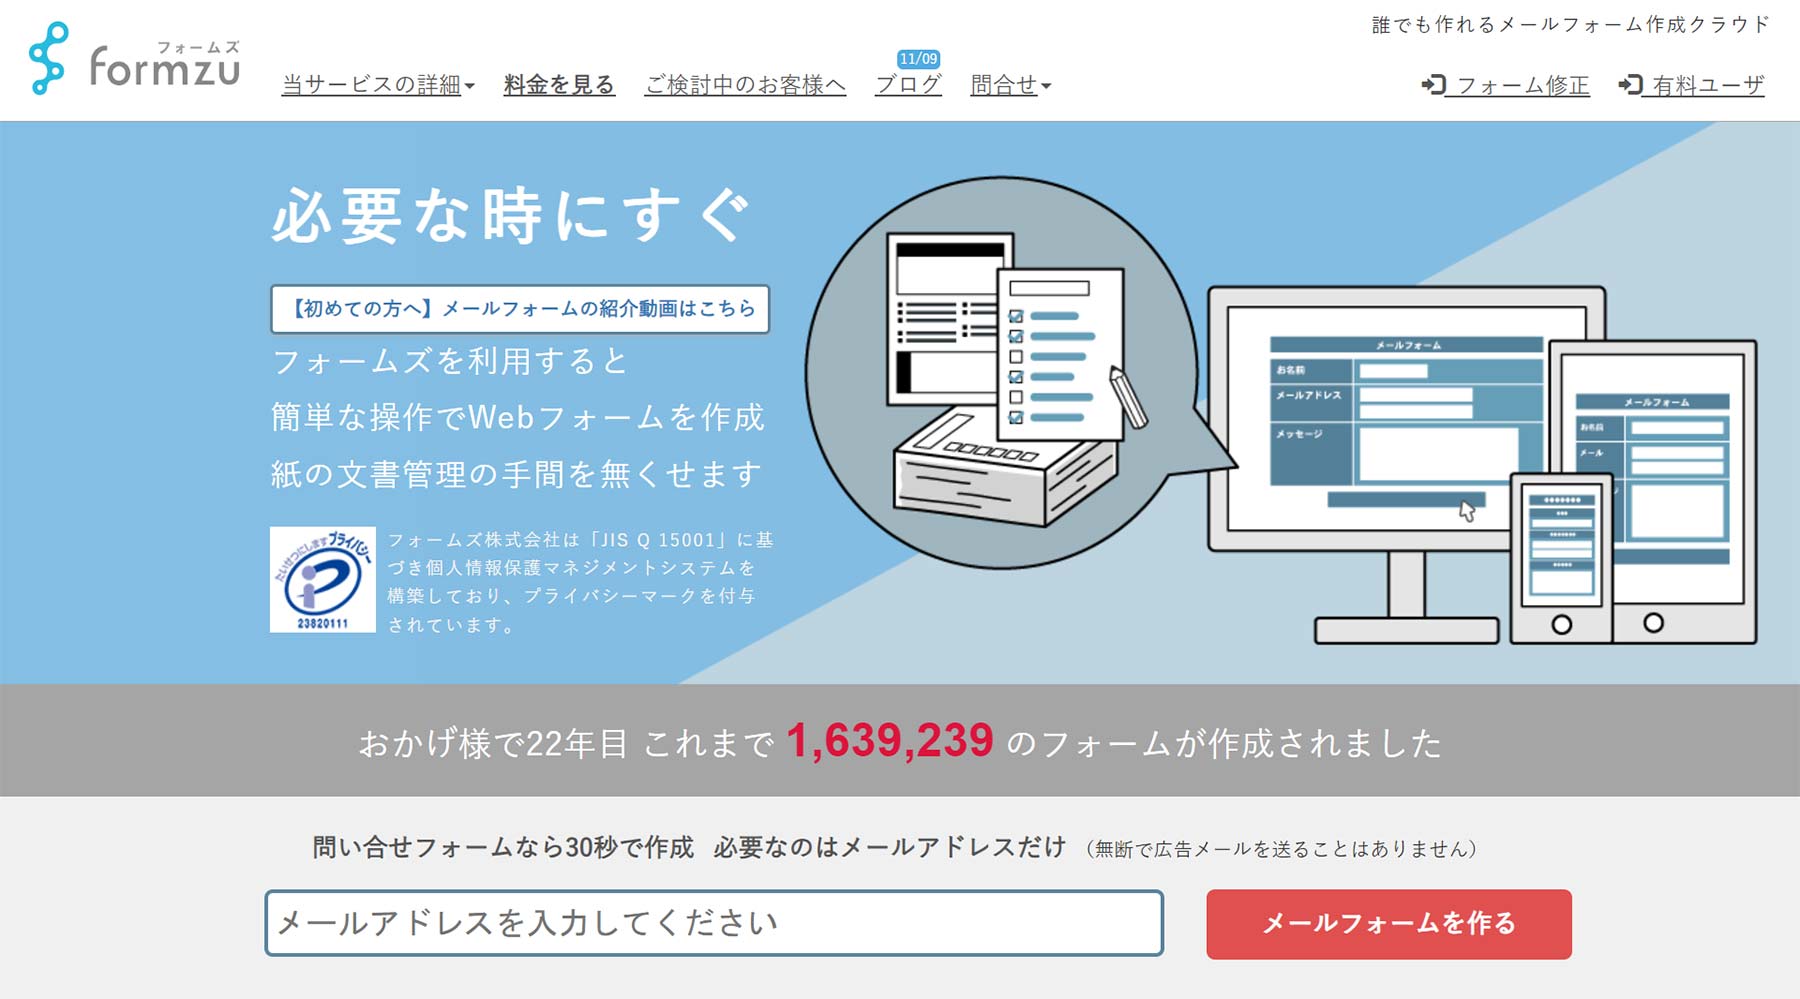 formzu公式Webサイト